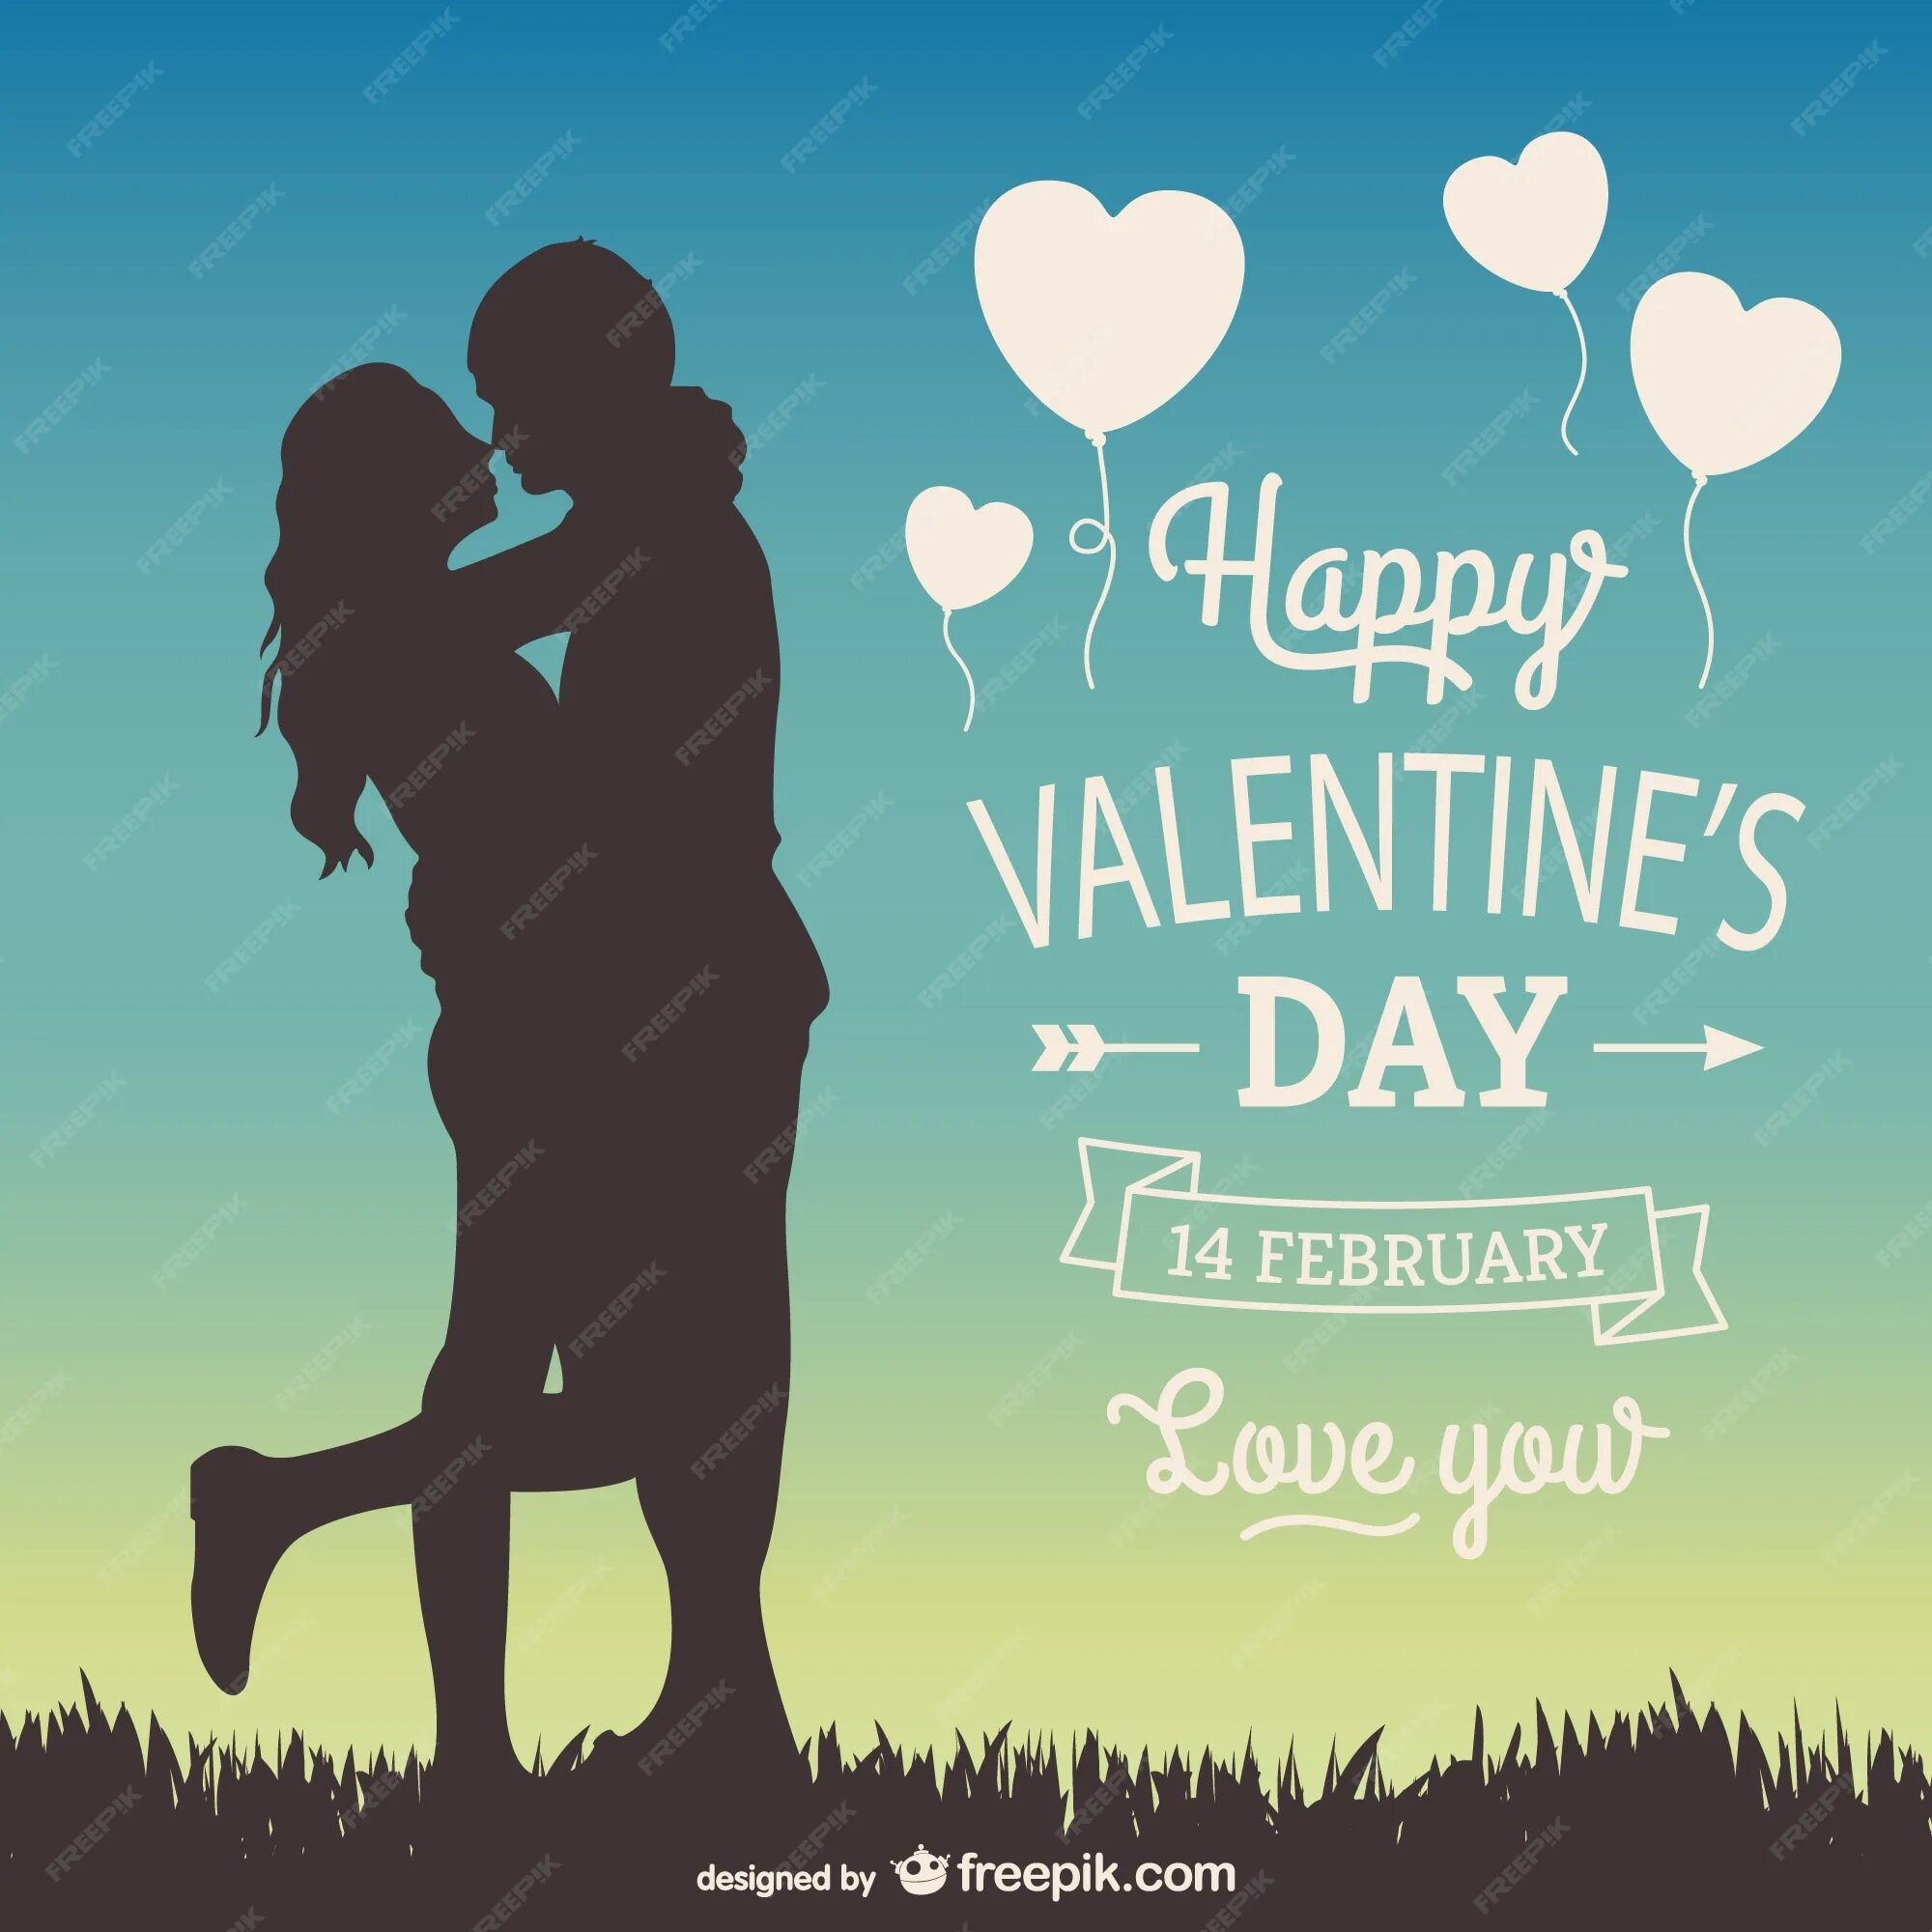 It is happy day of my. Valentine's Day. Happy Valentine's Day открытки. Открытки на 14 февраля. Valentine's Day i Love you.